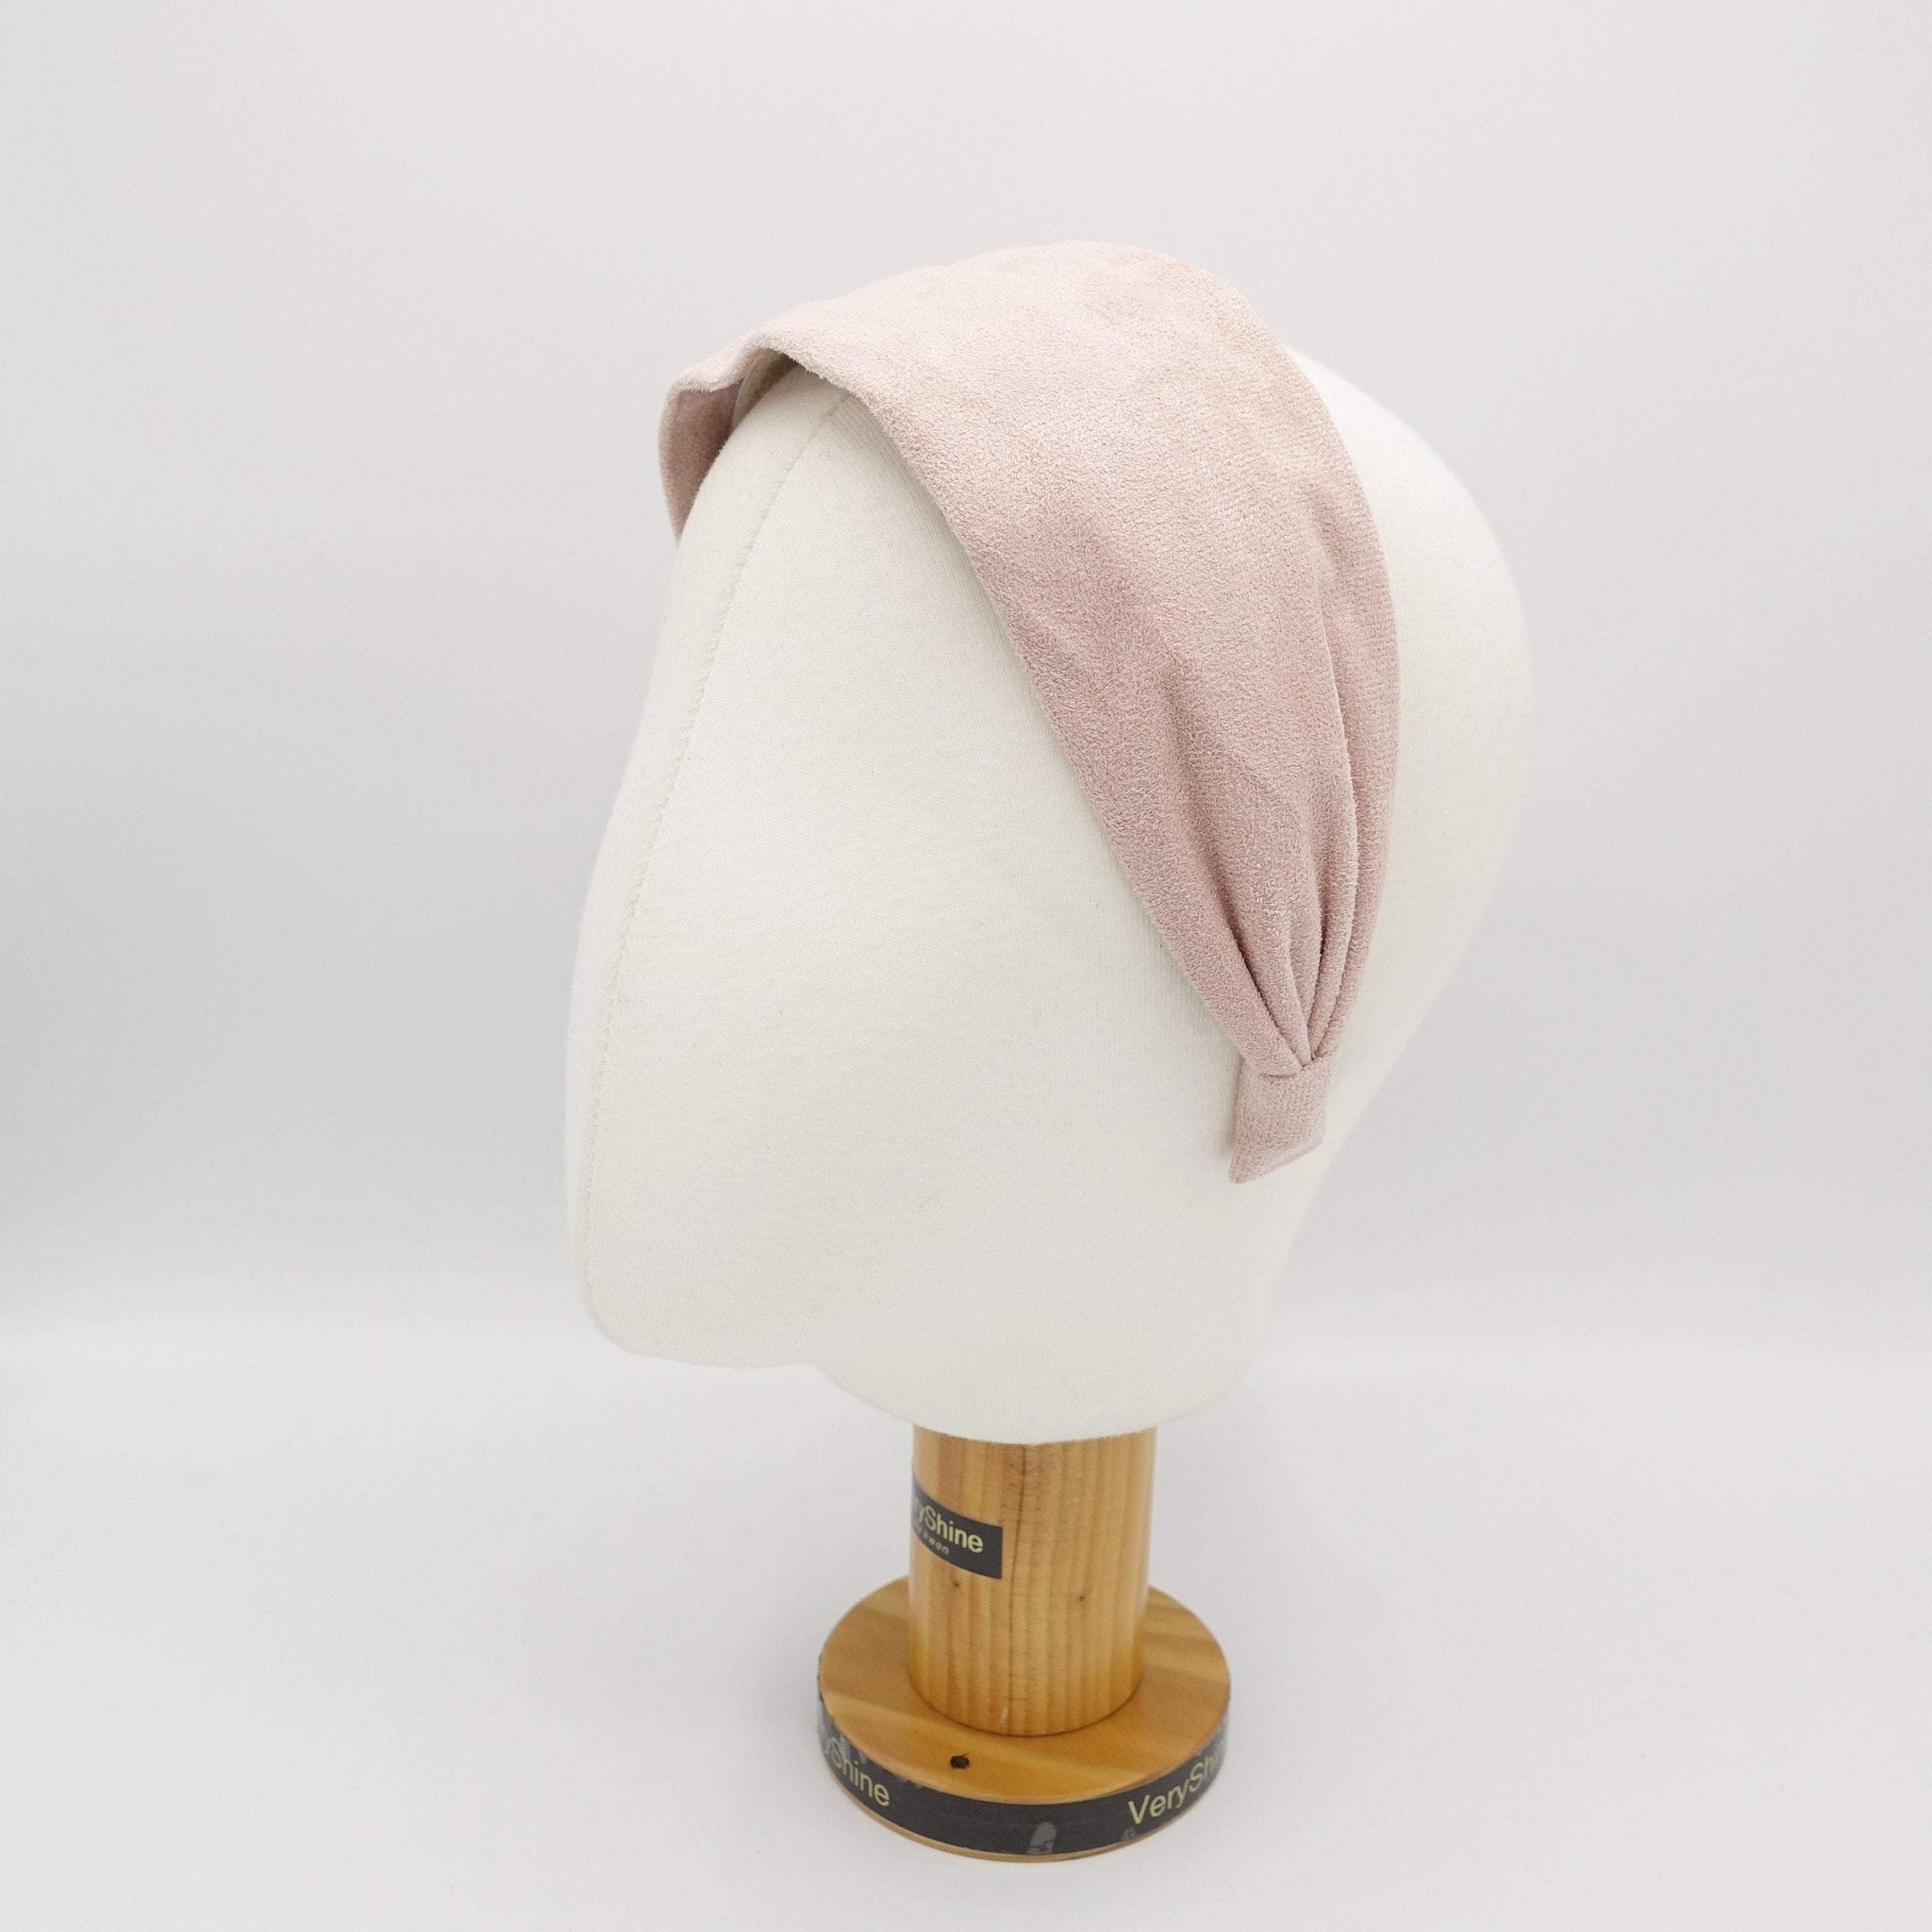 VeryShine Headband Pink suede flat headband basic wide hairband hair accessory for women